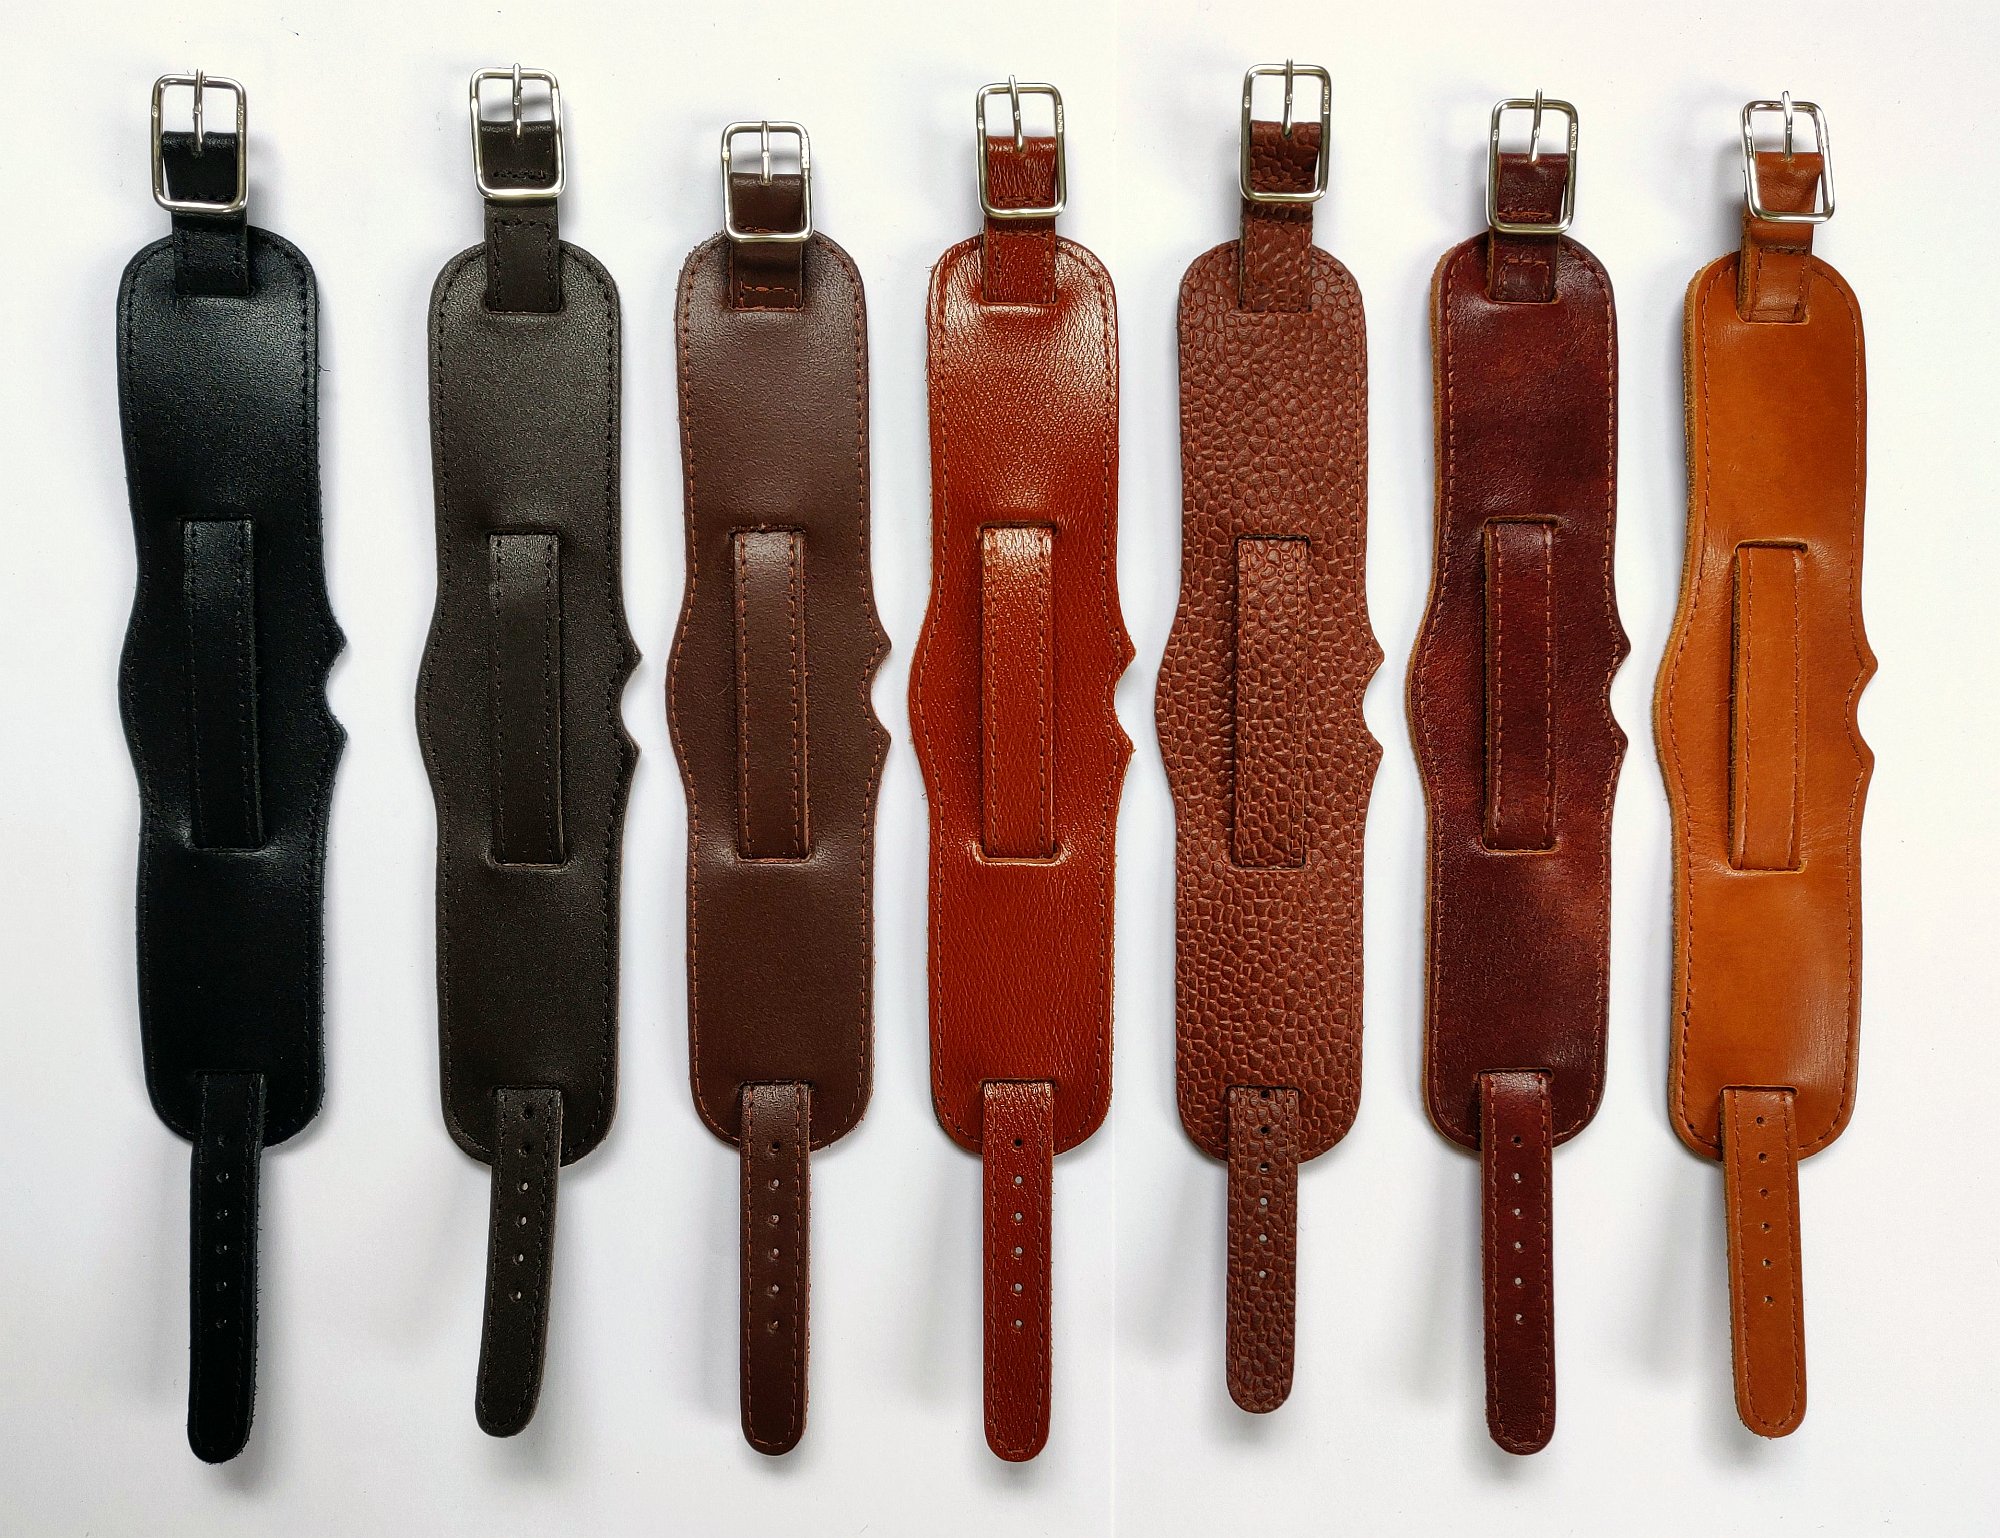 Type B straps with Great War sterling silver buckles:<br> Black, Dark Brown, Sepia, Chestnut, Tan Morocco, Italian Dark Chestnut, Italian Brandy